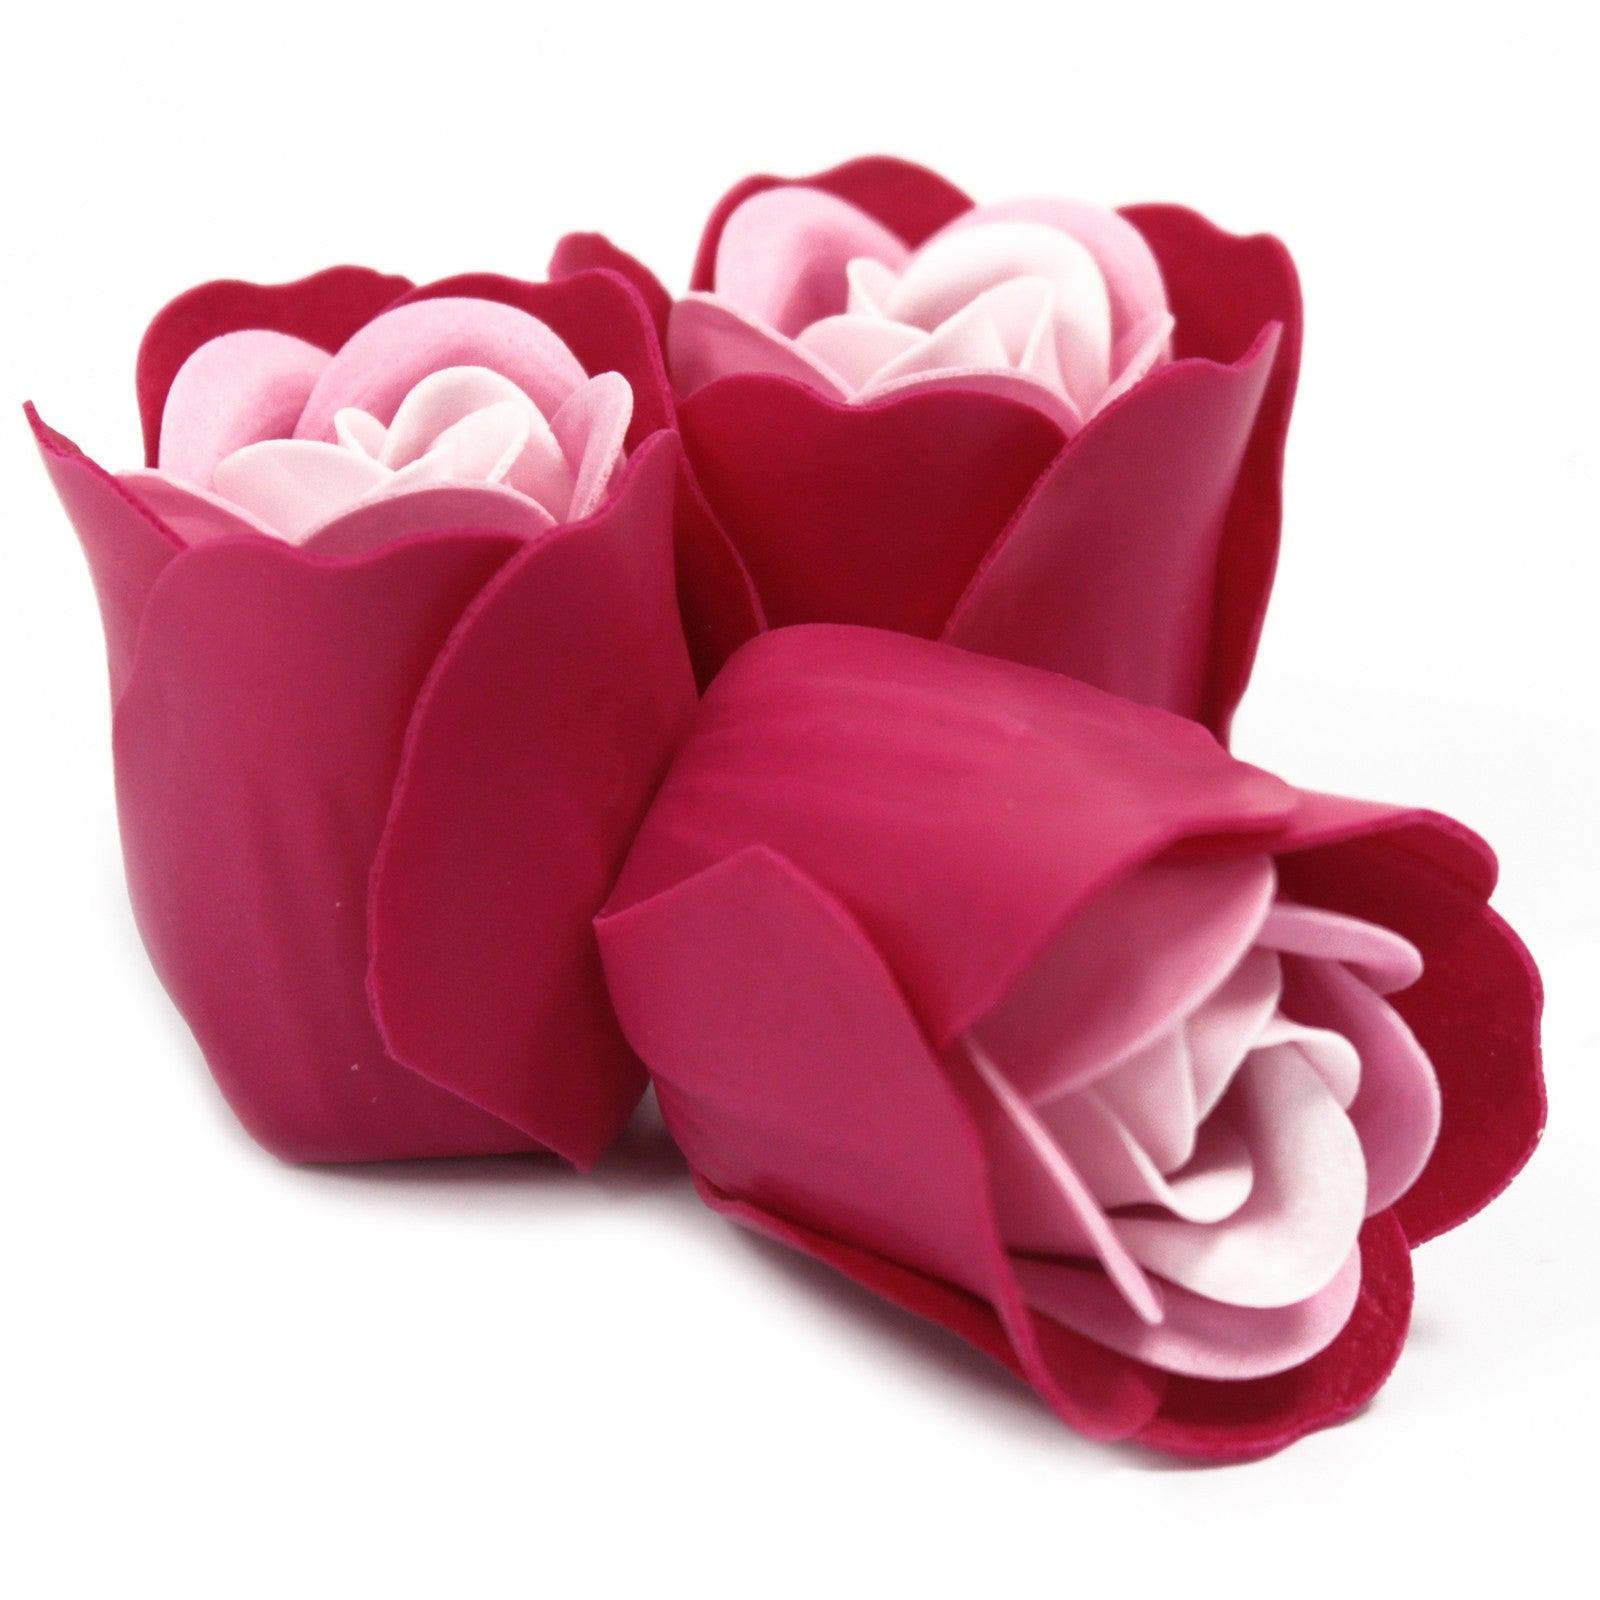 Set of 3 Soap Flower Heart Box - Pink Roses - DuvetDay.co.uk